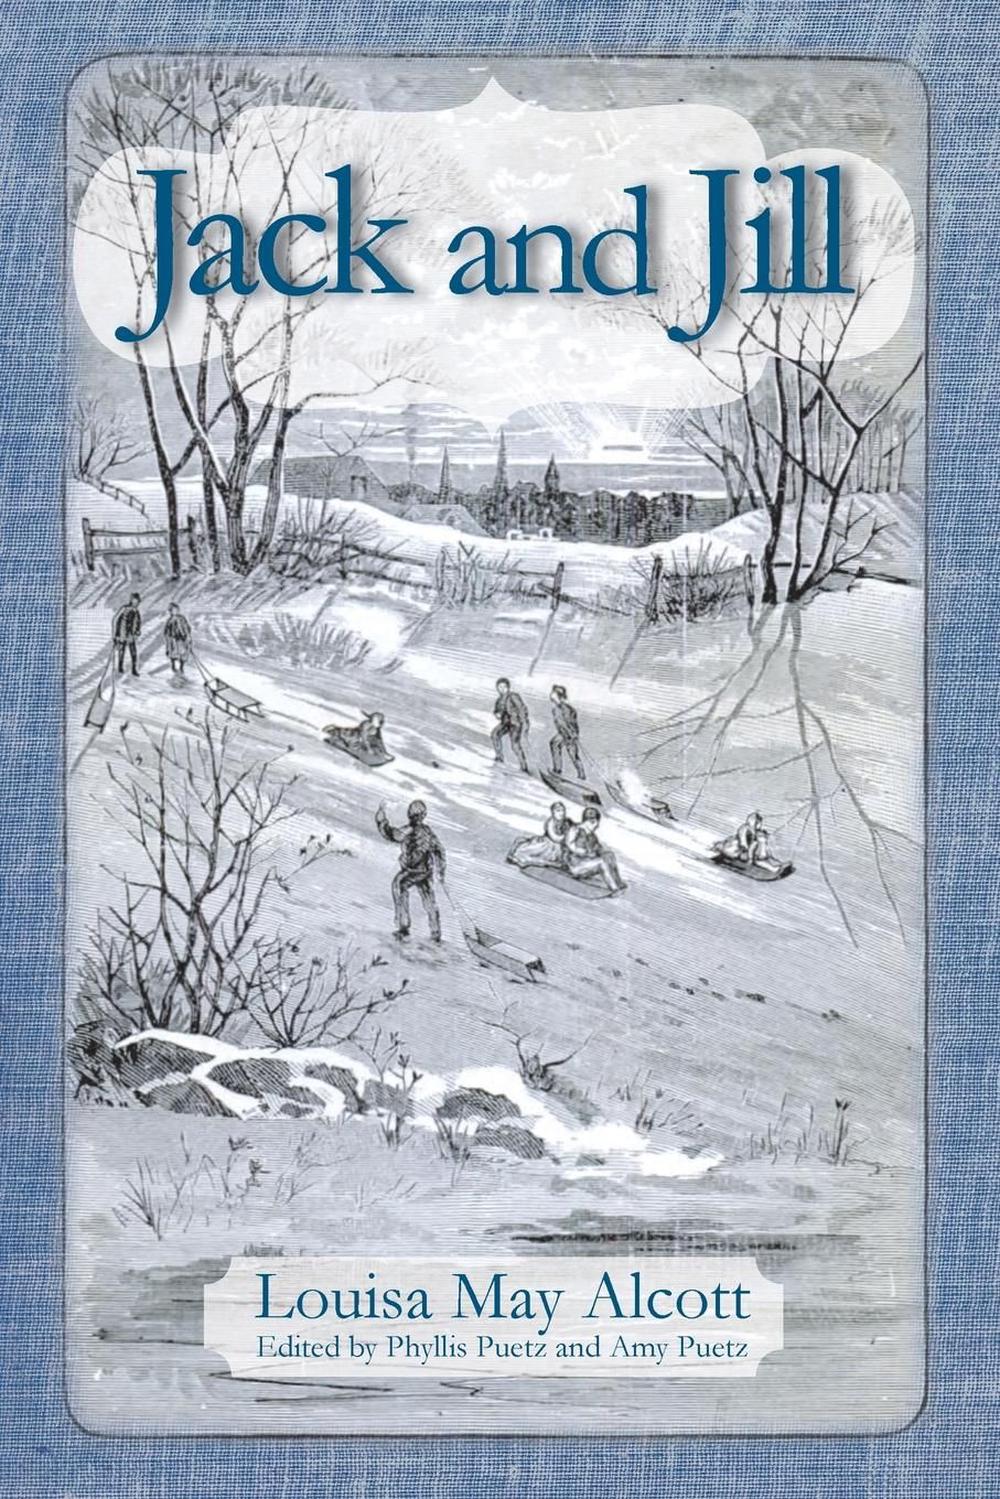 Jack and Jill by Louisa May Alcott (English) Paperback Book Free Shipping! 9781624920172 | eBay